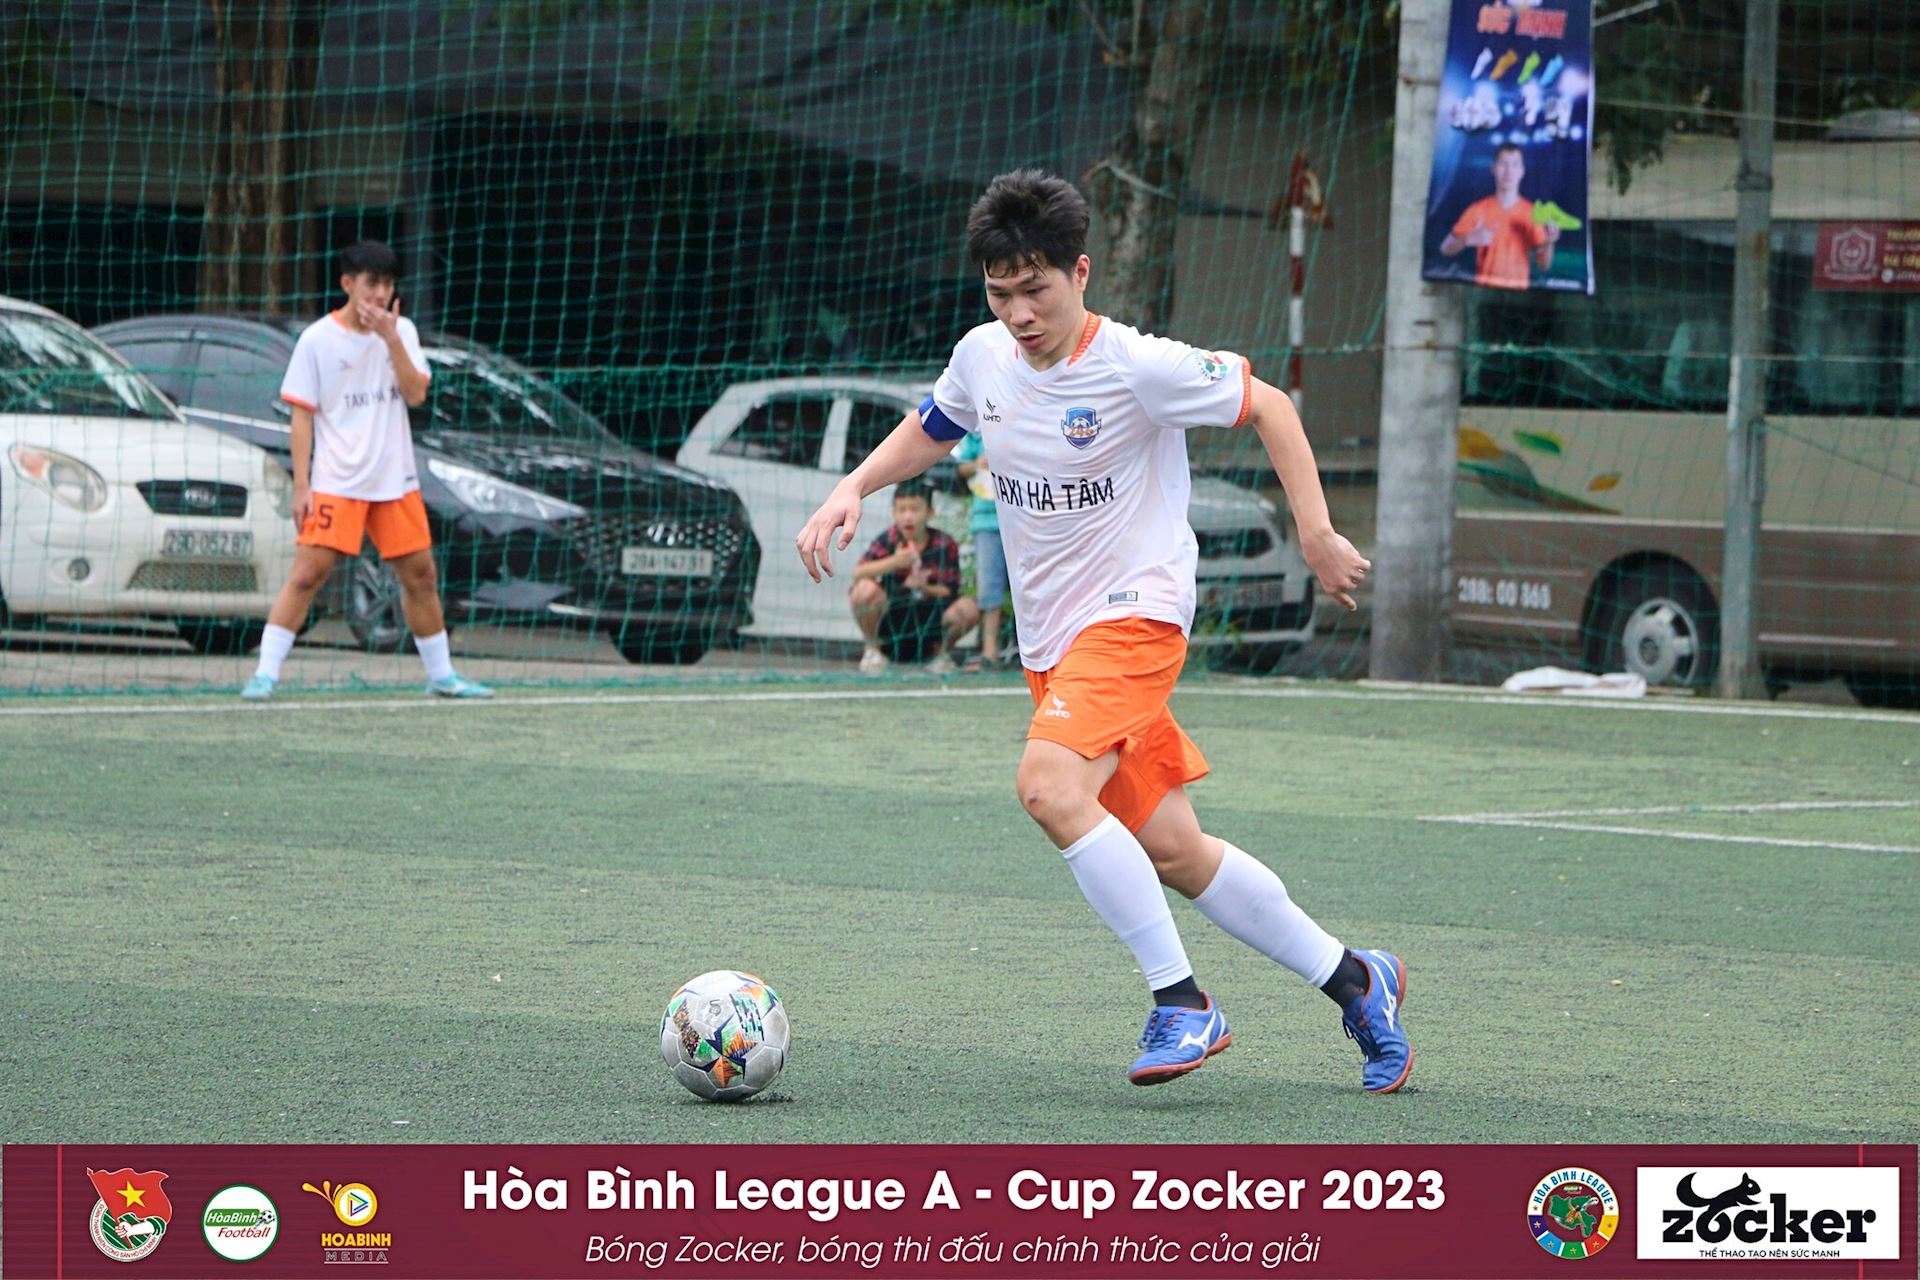 bong-zocker-Hoa-Bình-League-ZOCKER-CUP-2023-3